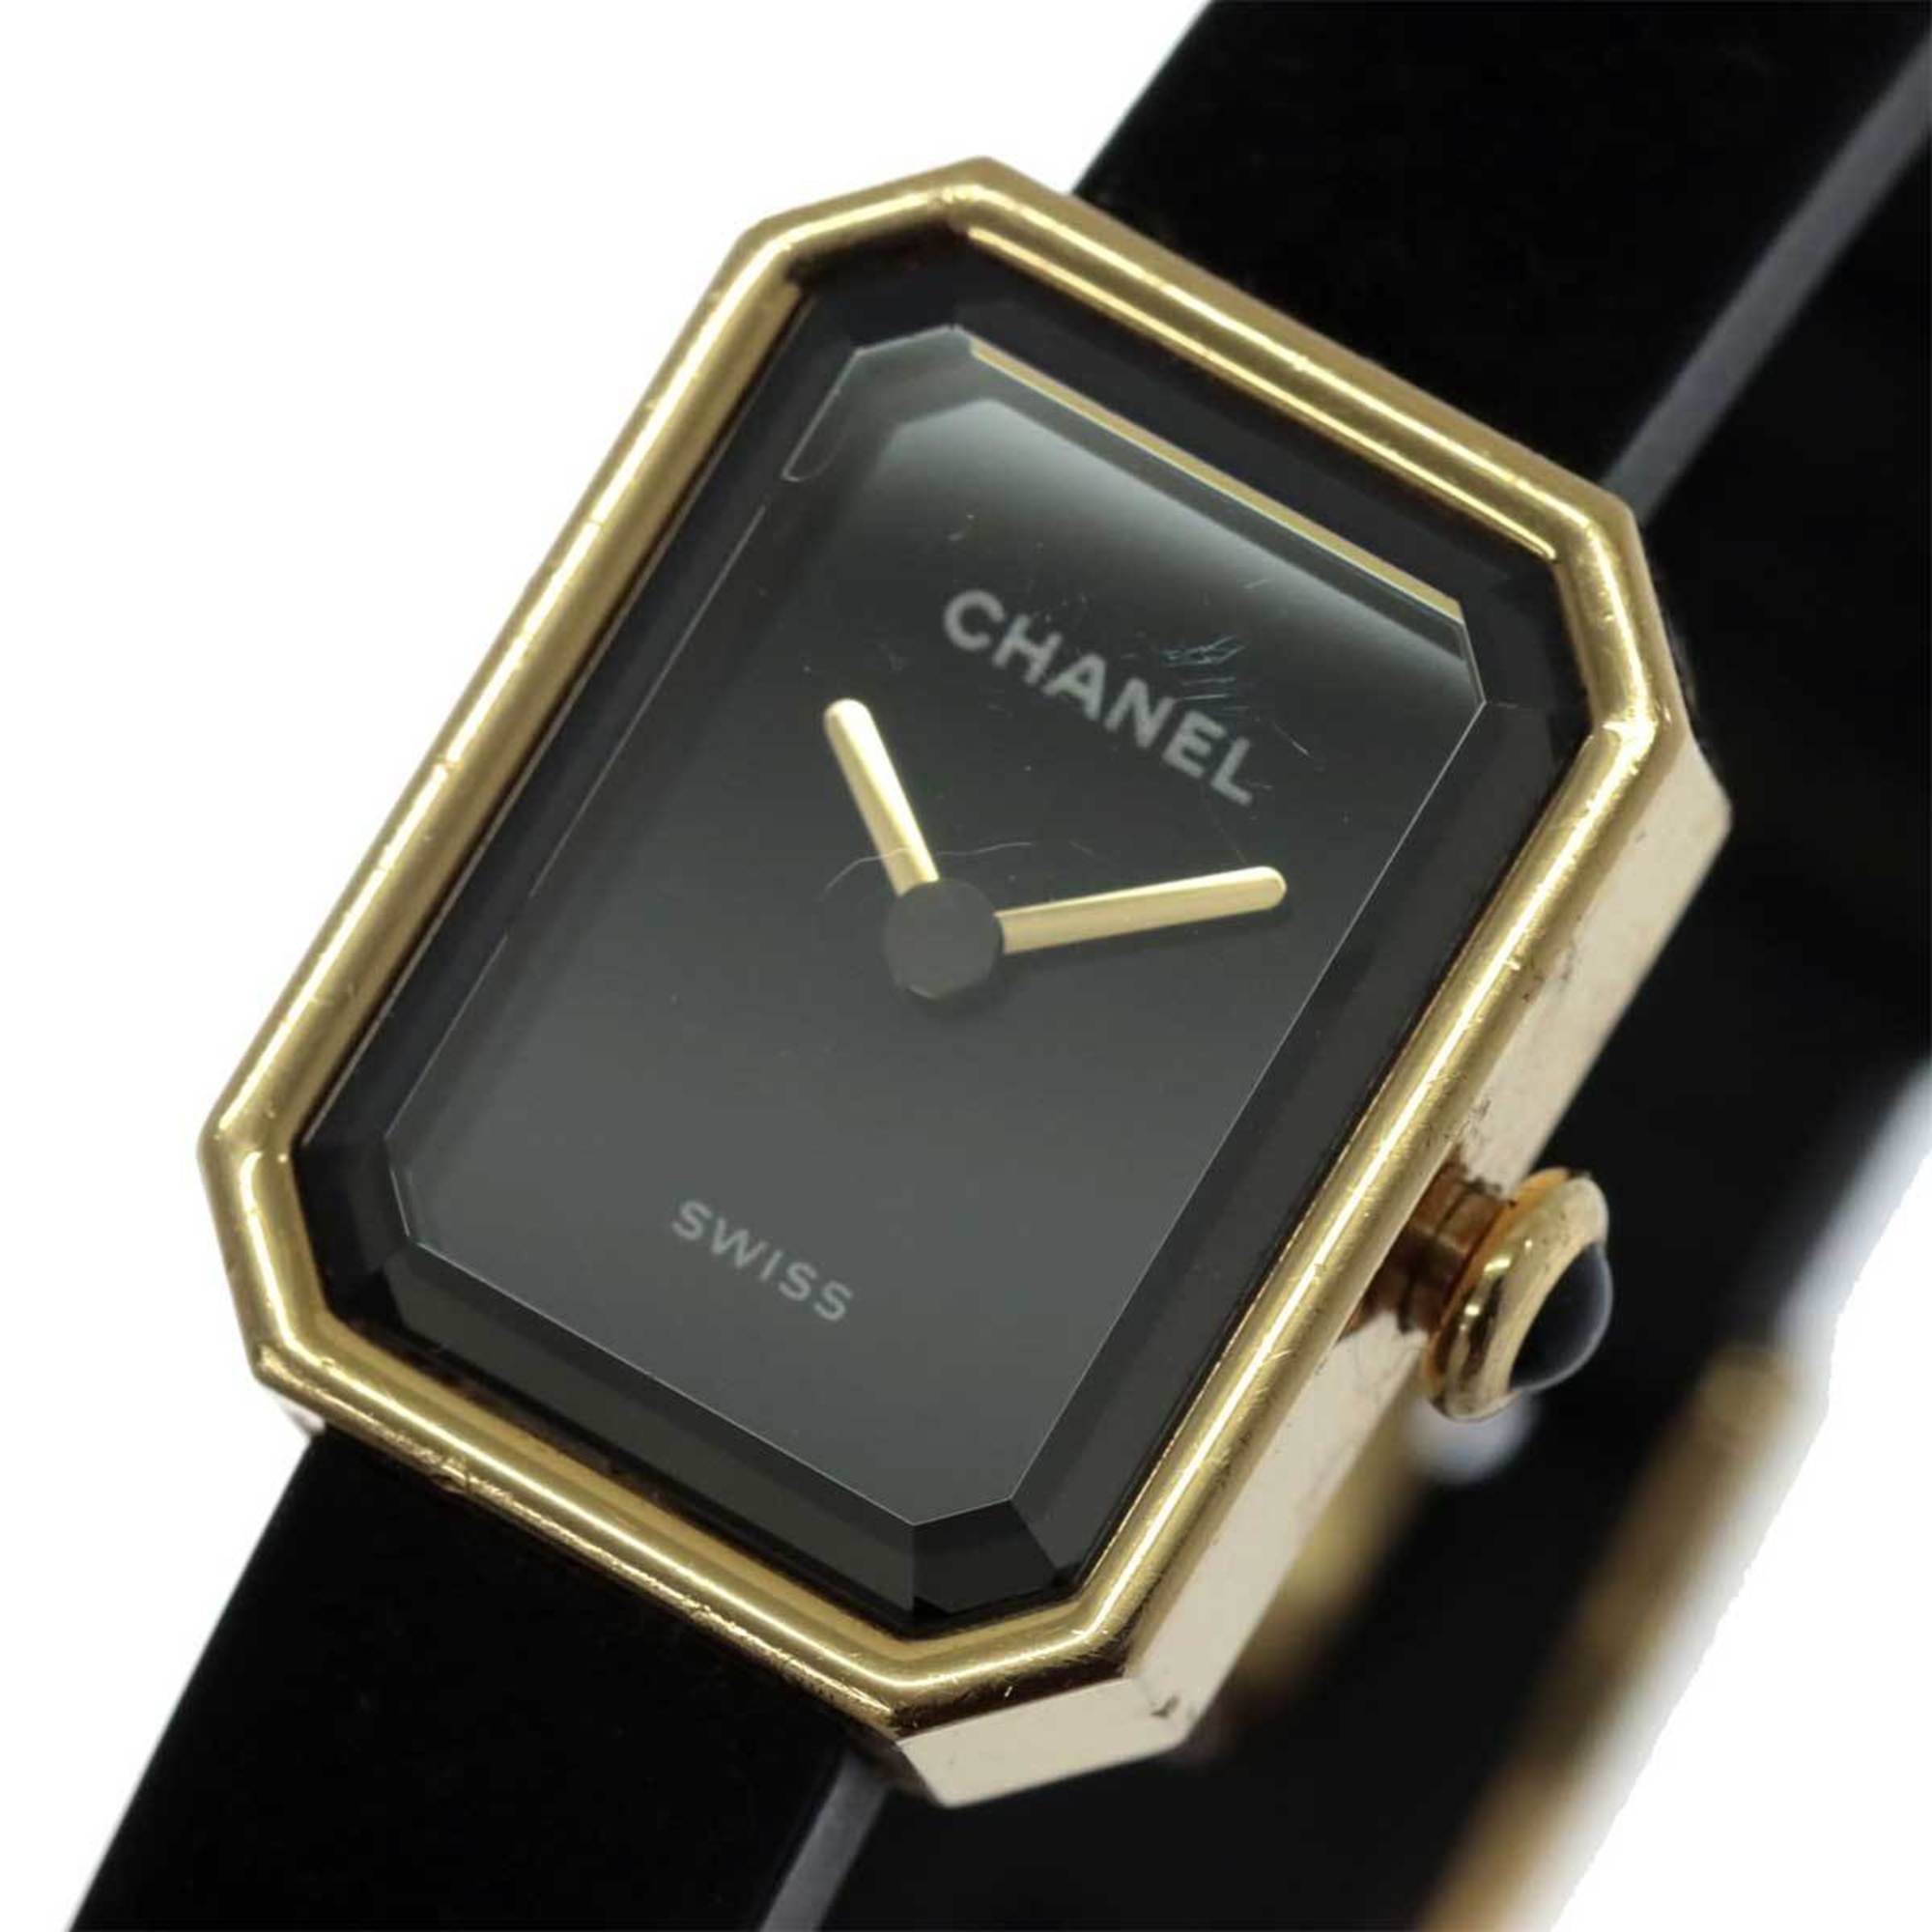 CHANEL Premiere Velvet H6125 Women's Watch Black Dial K18YG Yellow Gold Quartz